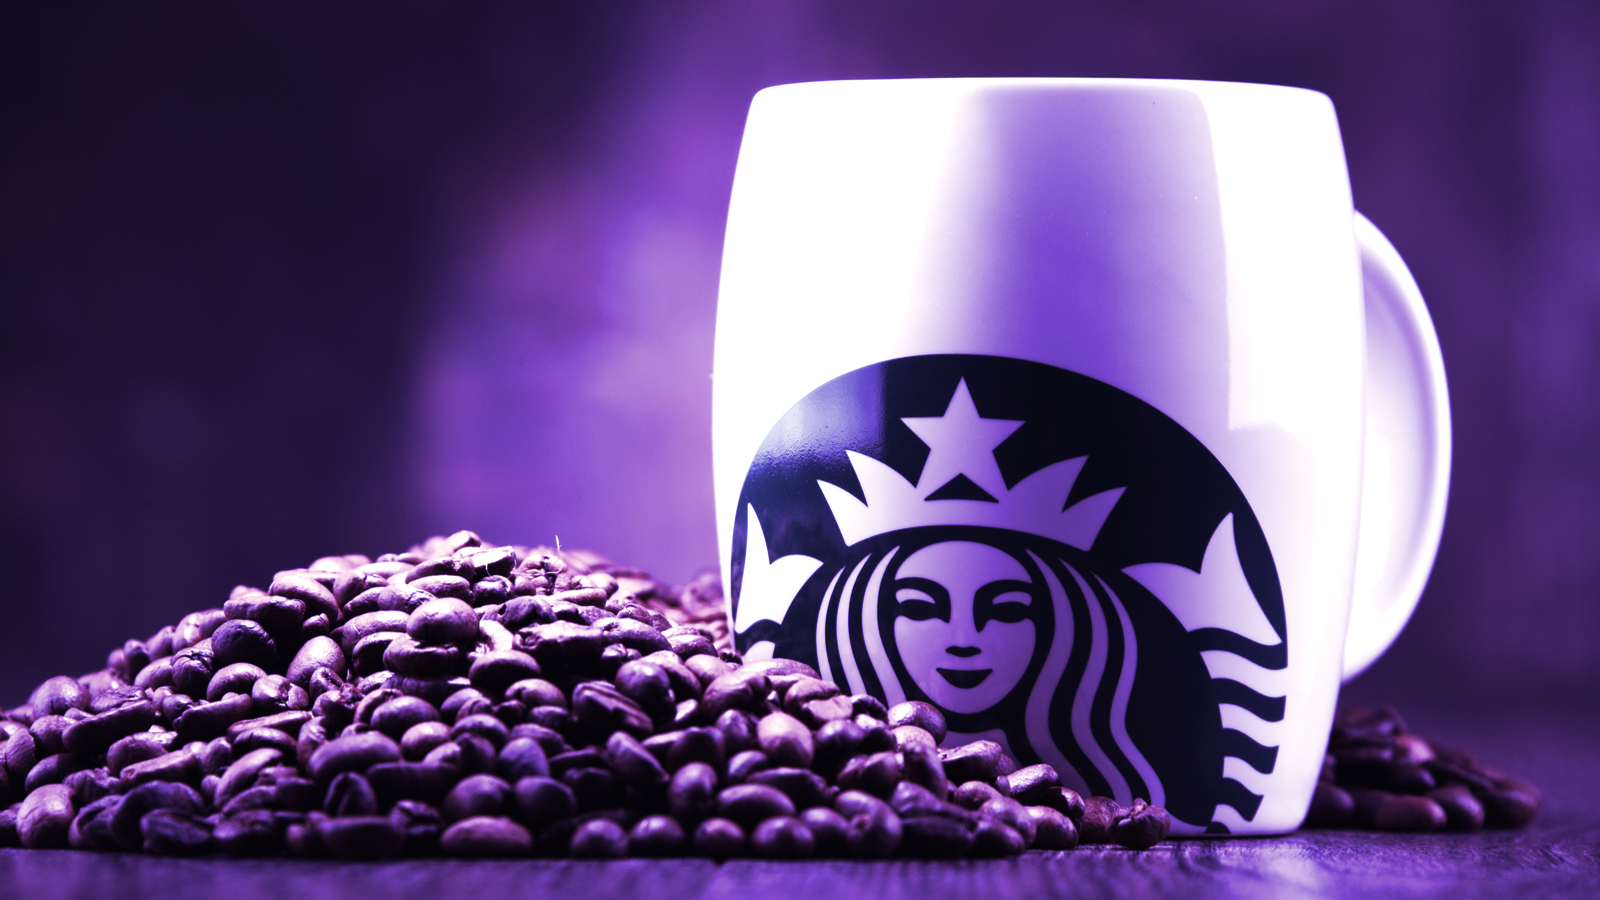 Starbucks Teases Web3 Updates to Its Popular Rewards Program